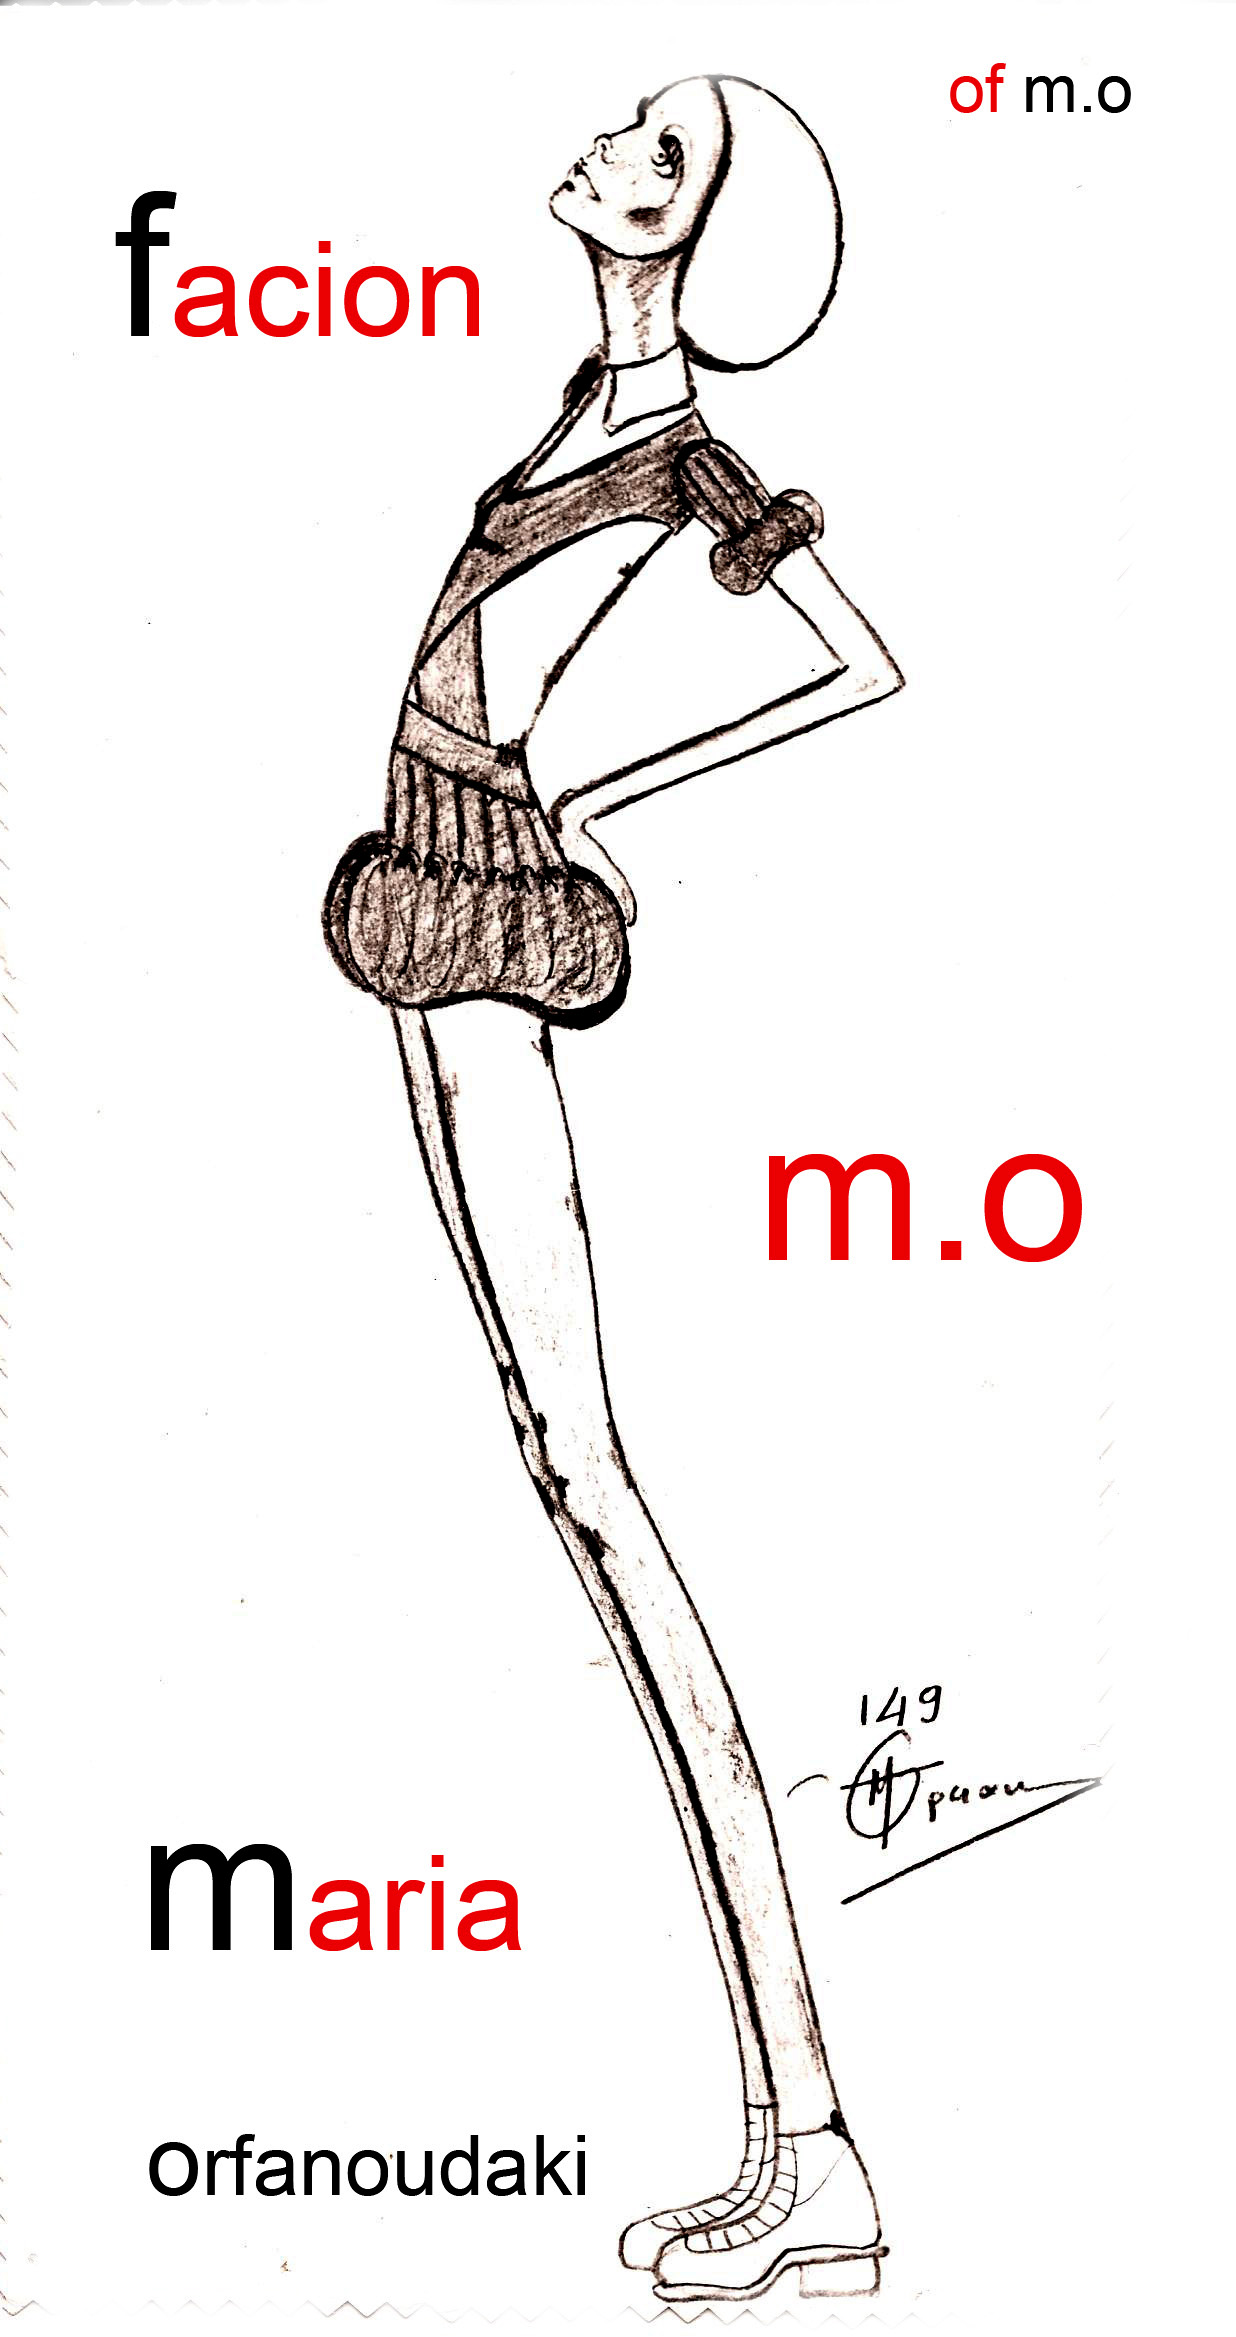 fashion-mode-maria-orfanoudaki-mo-37